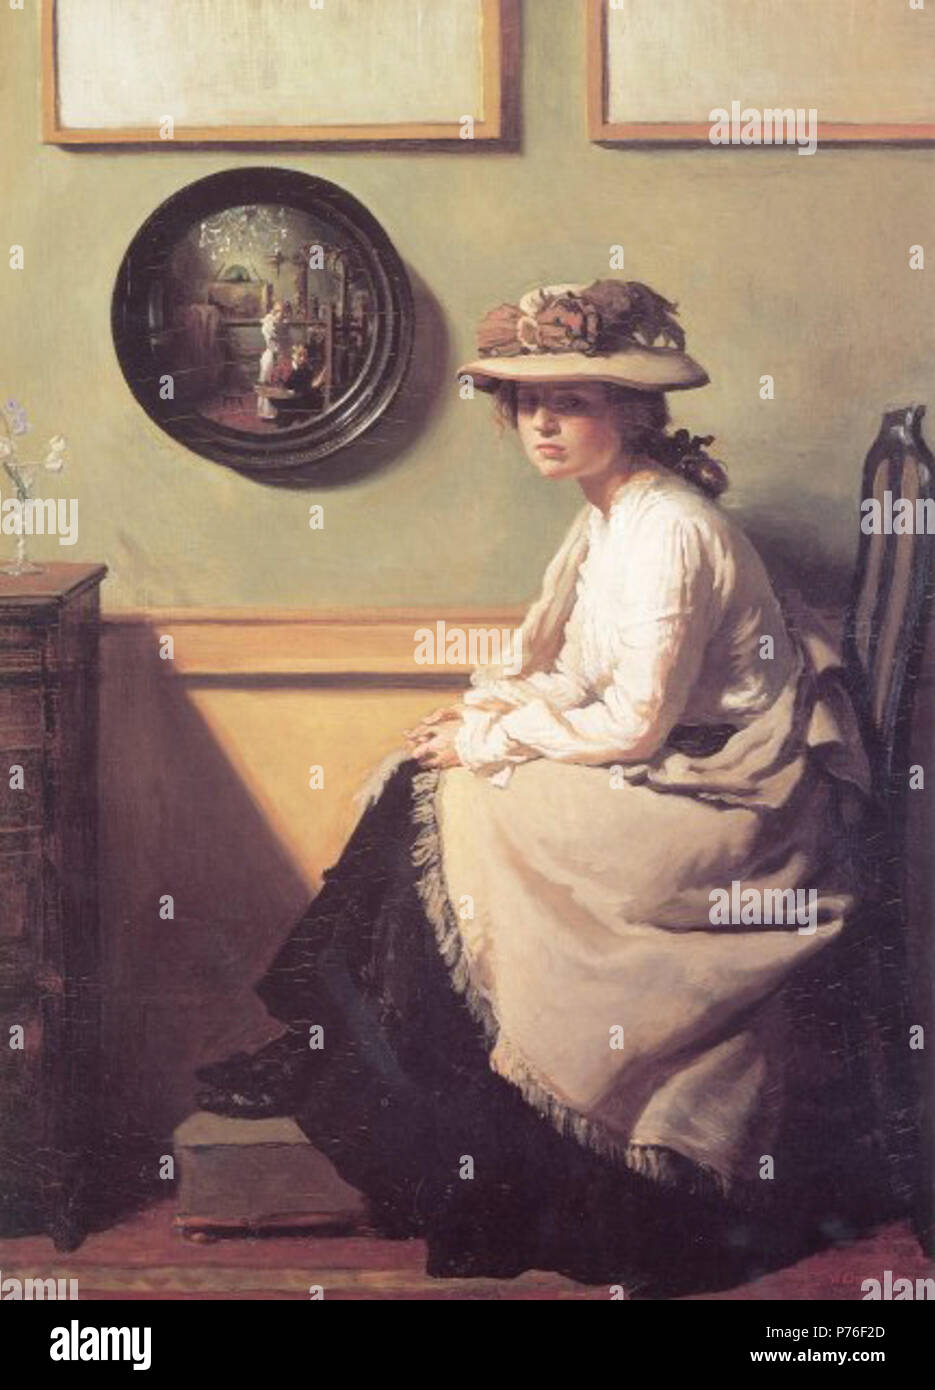 . French: Le Miroir The Mirror  1900 230 William Orpen The Mirror Stock Photo